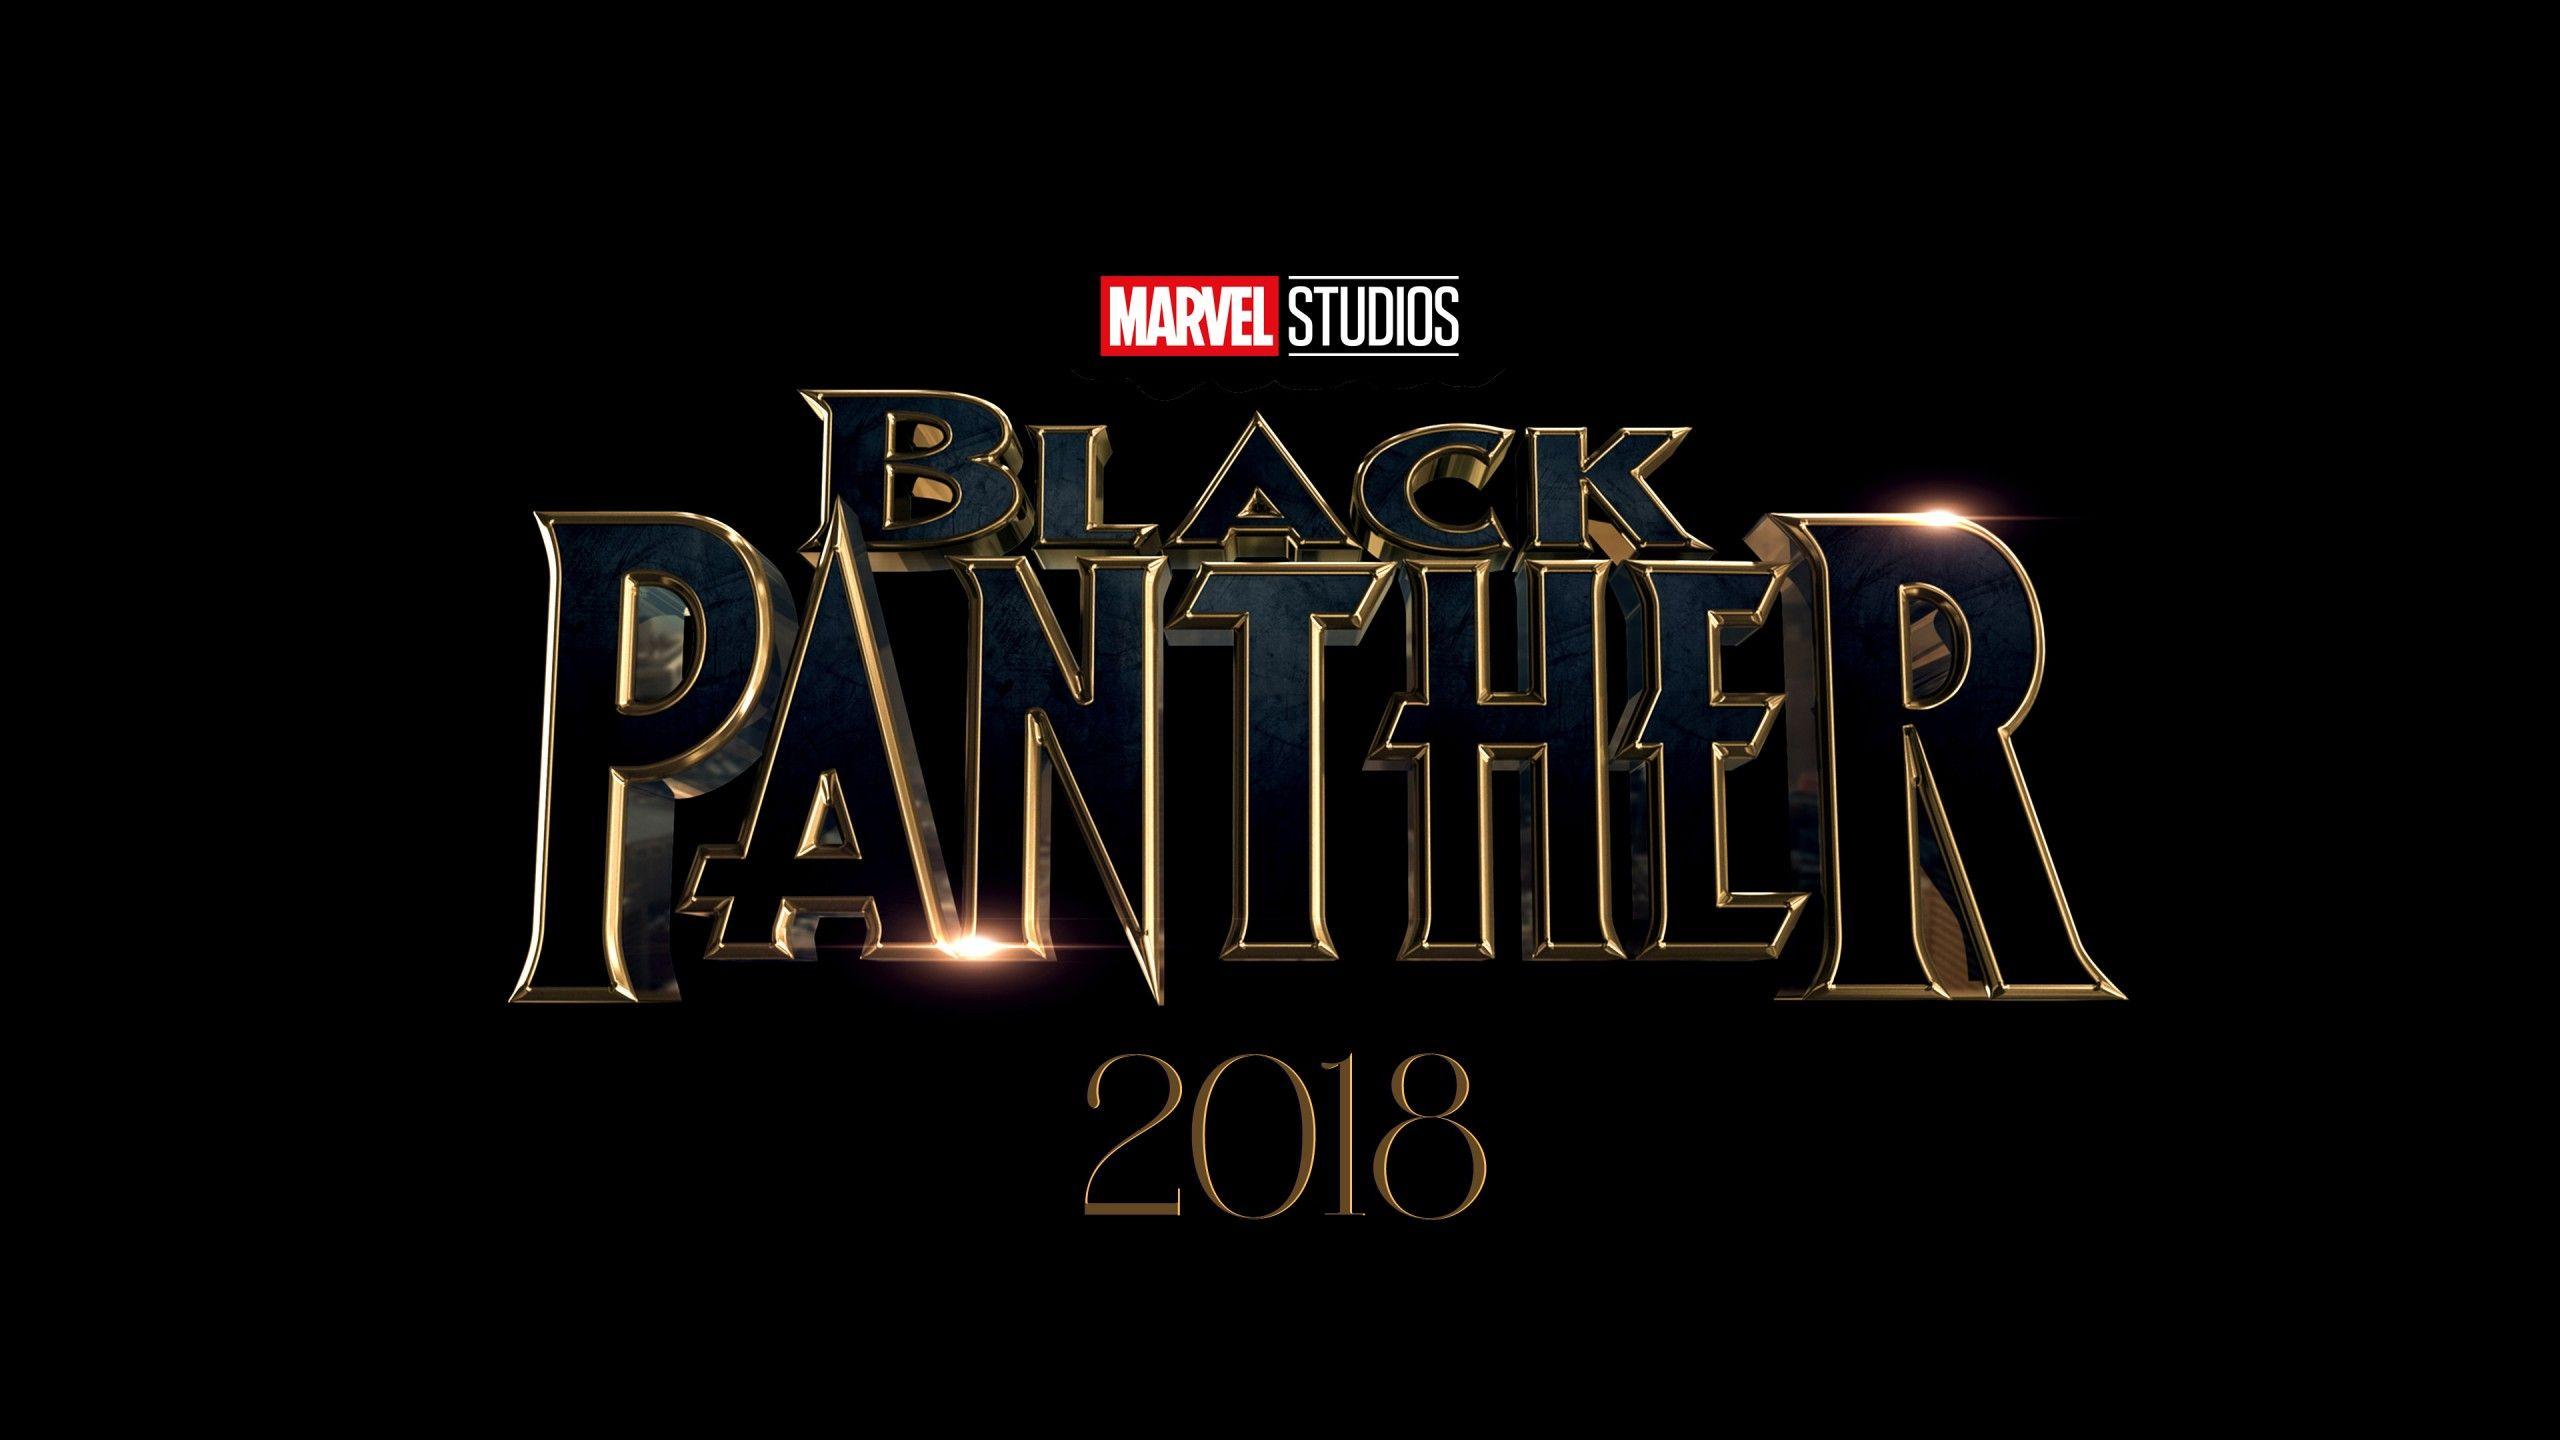 Black Panther Movie Logo Wallpaper Background 62054 2560x1440 px